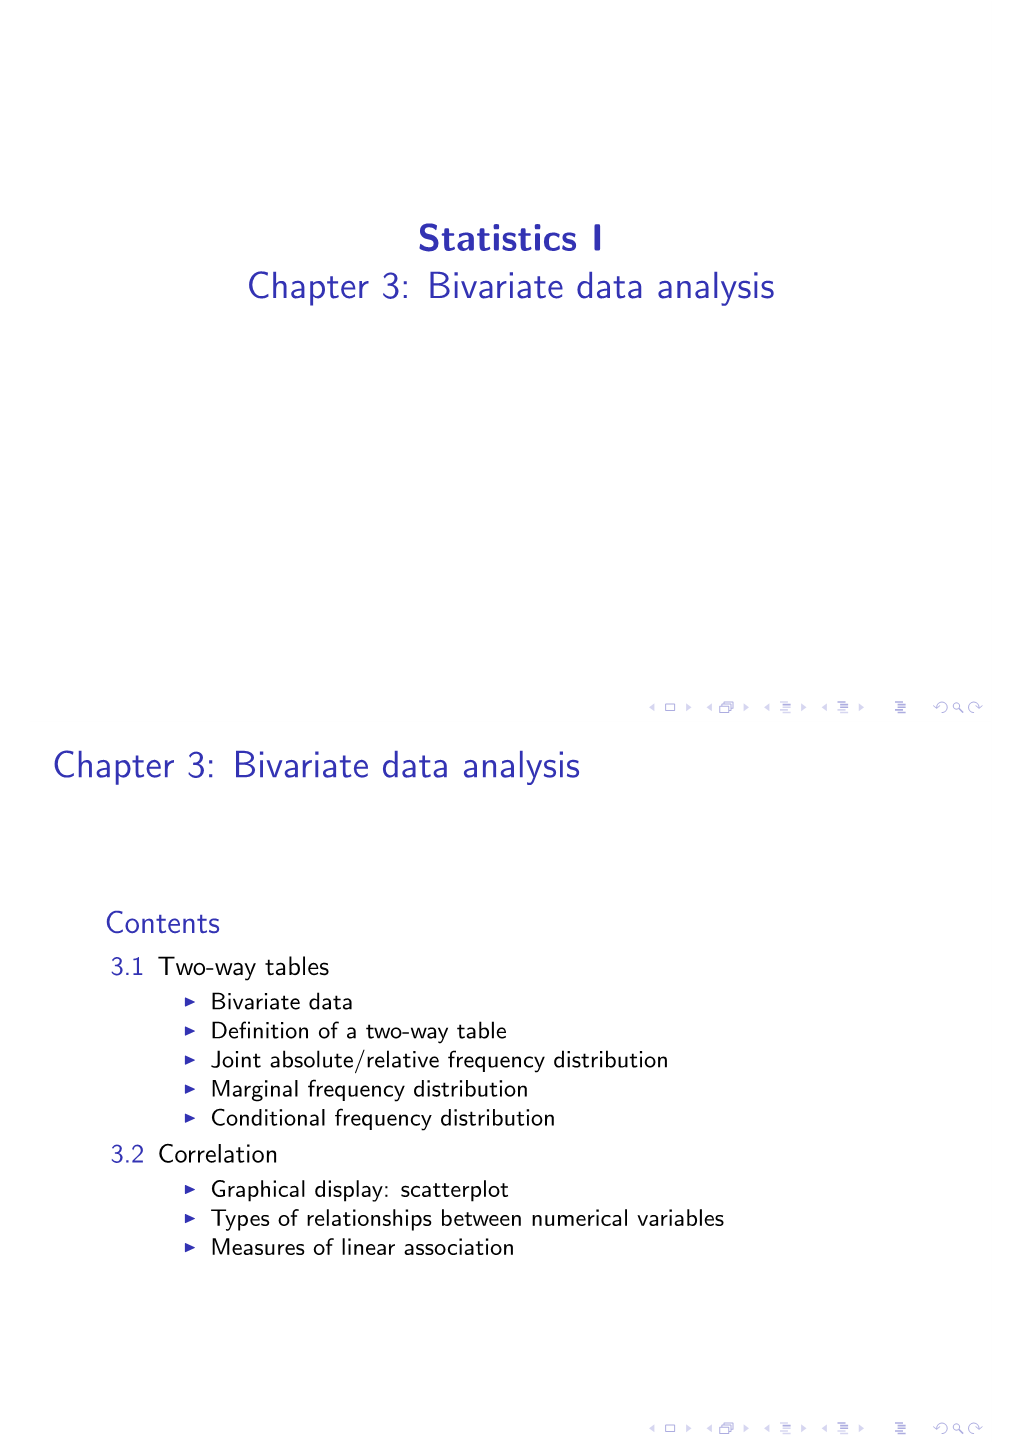 Statistics I Chapter 3: Bivariate Data Analysis